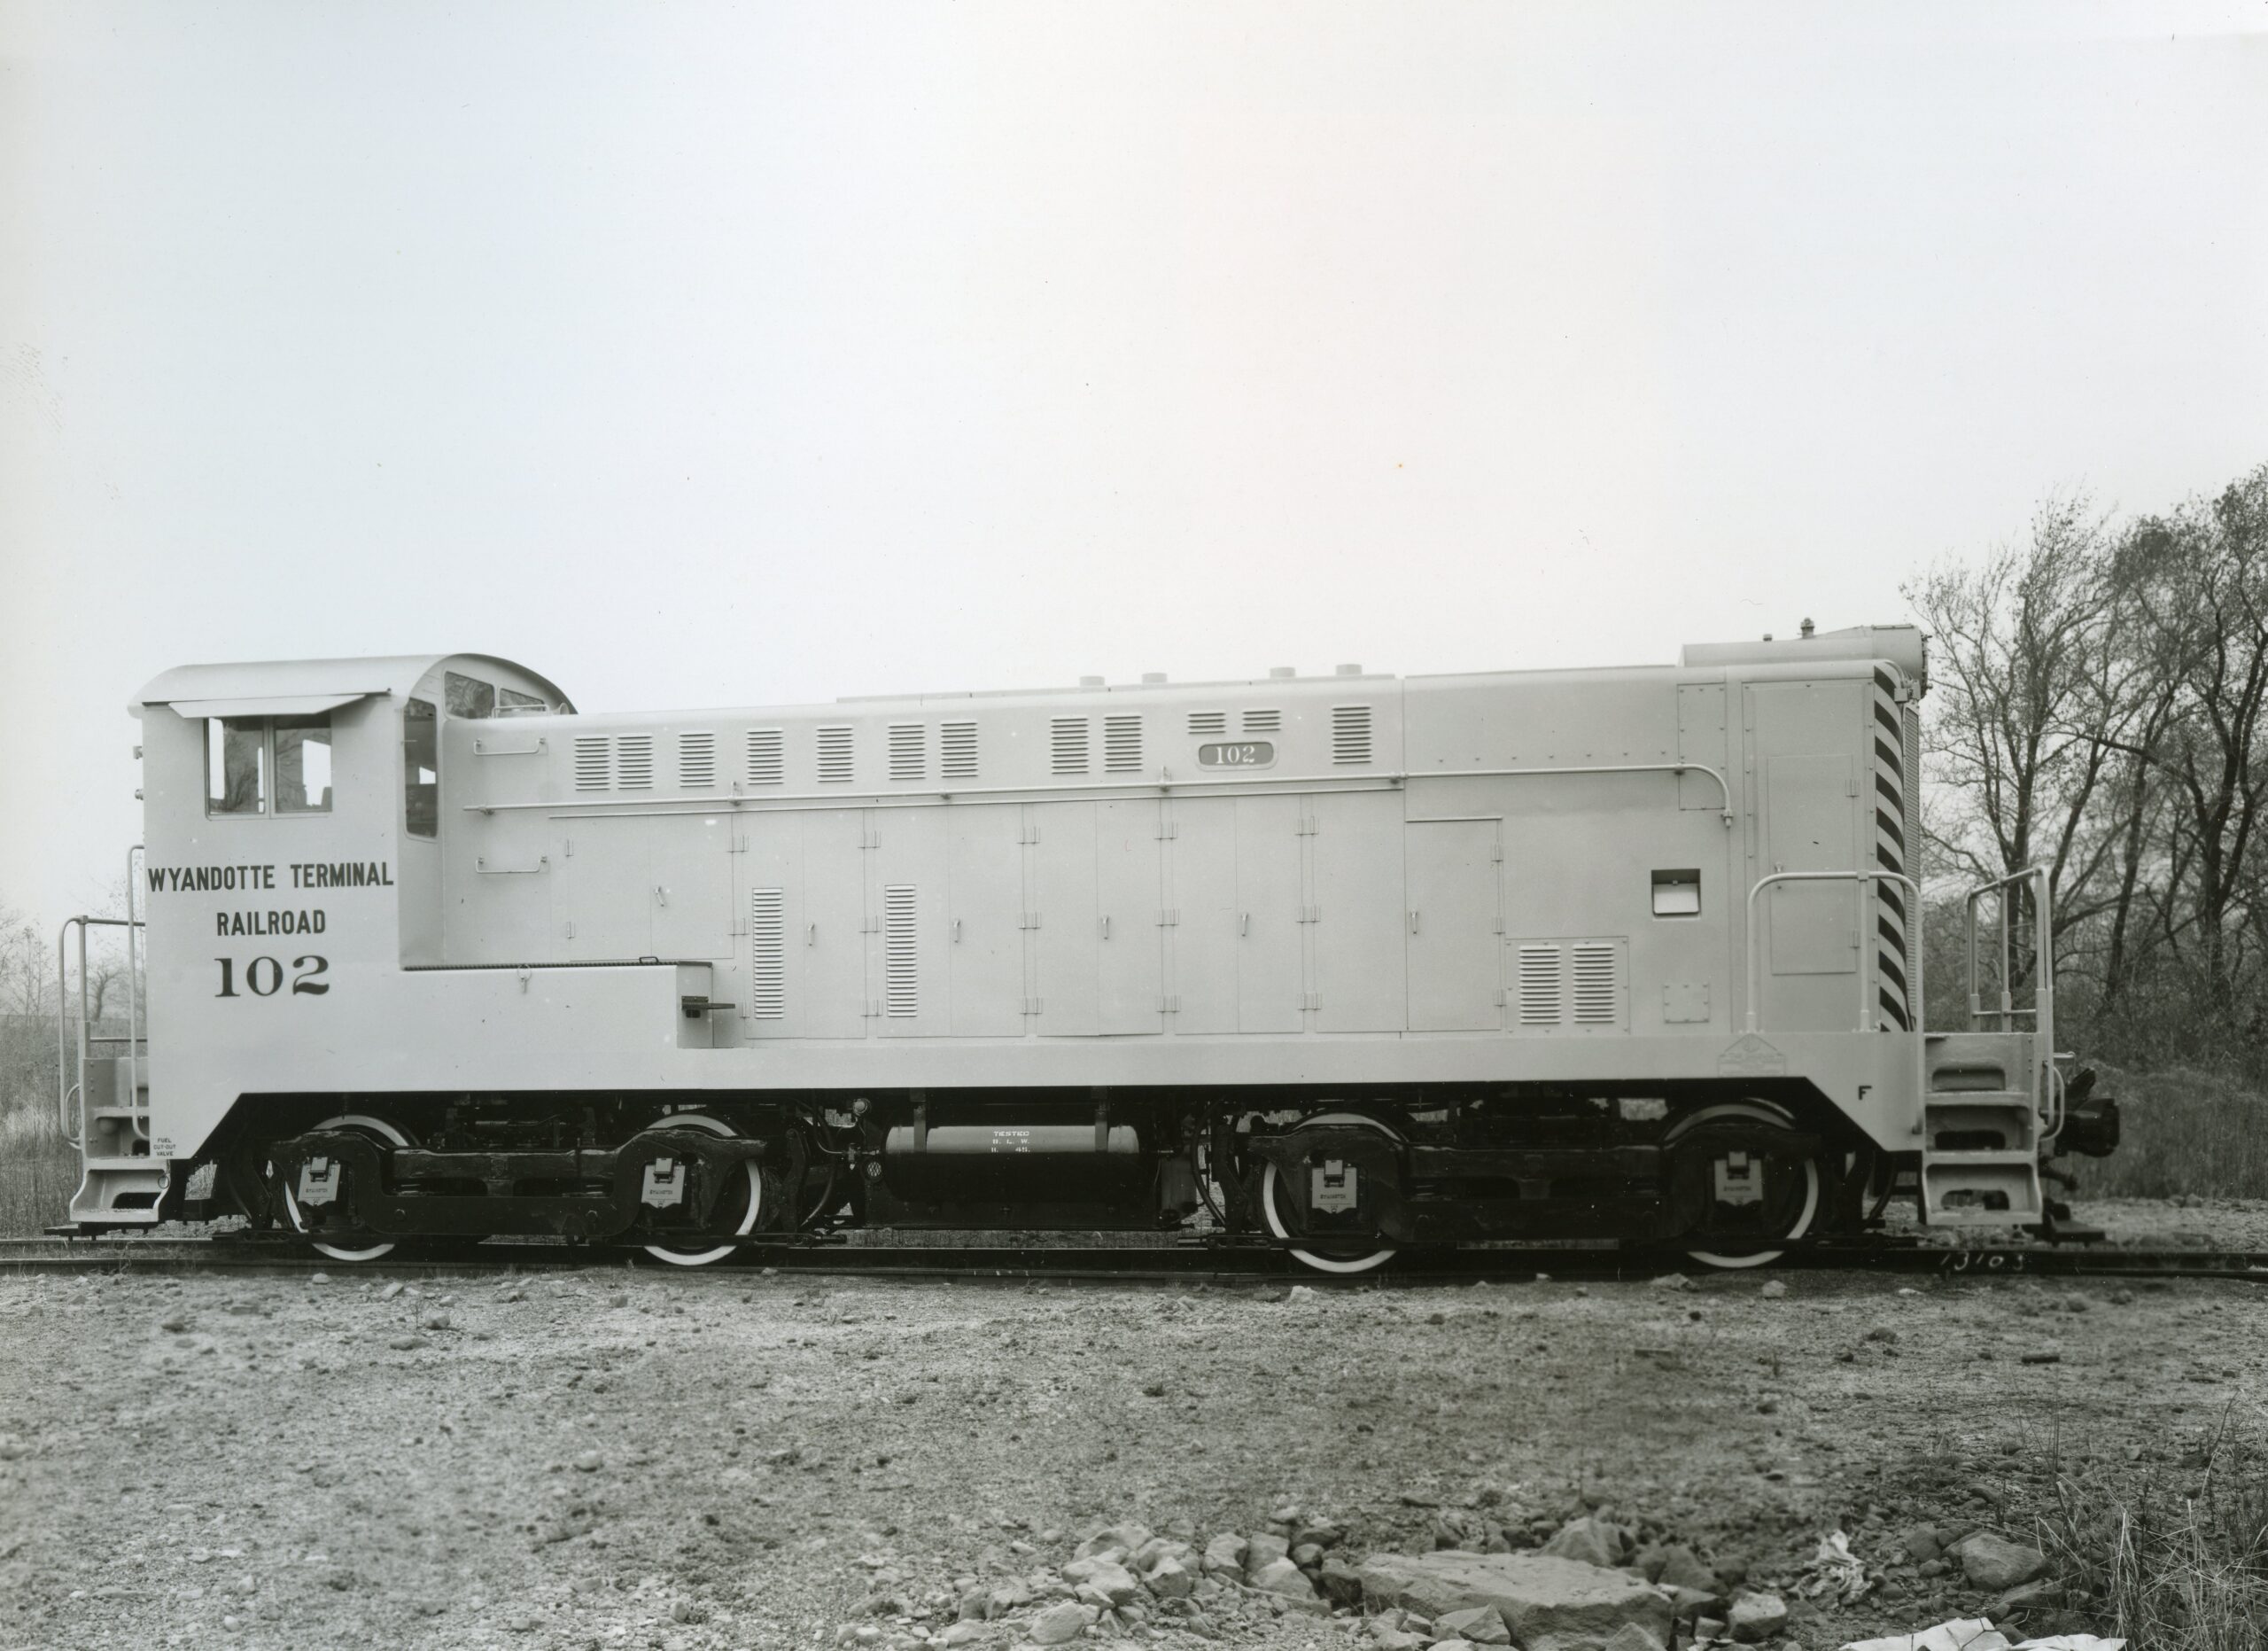 Wyandotte Terminal Railroad | Eddystone, Pennsylvania | V0660 #102 diesel-electric switcher locomotive | November 1945 | Baldwin Locomotive Works photograph | Elmer Kremkow collection